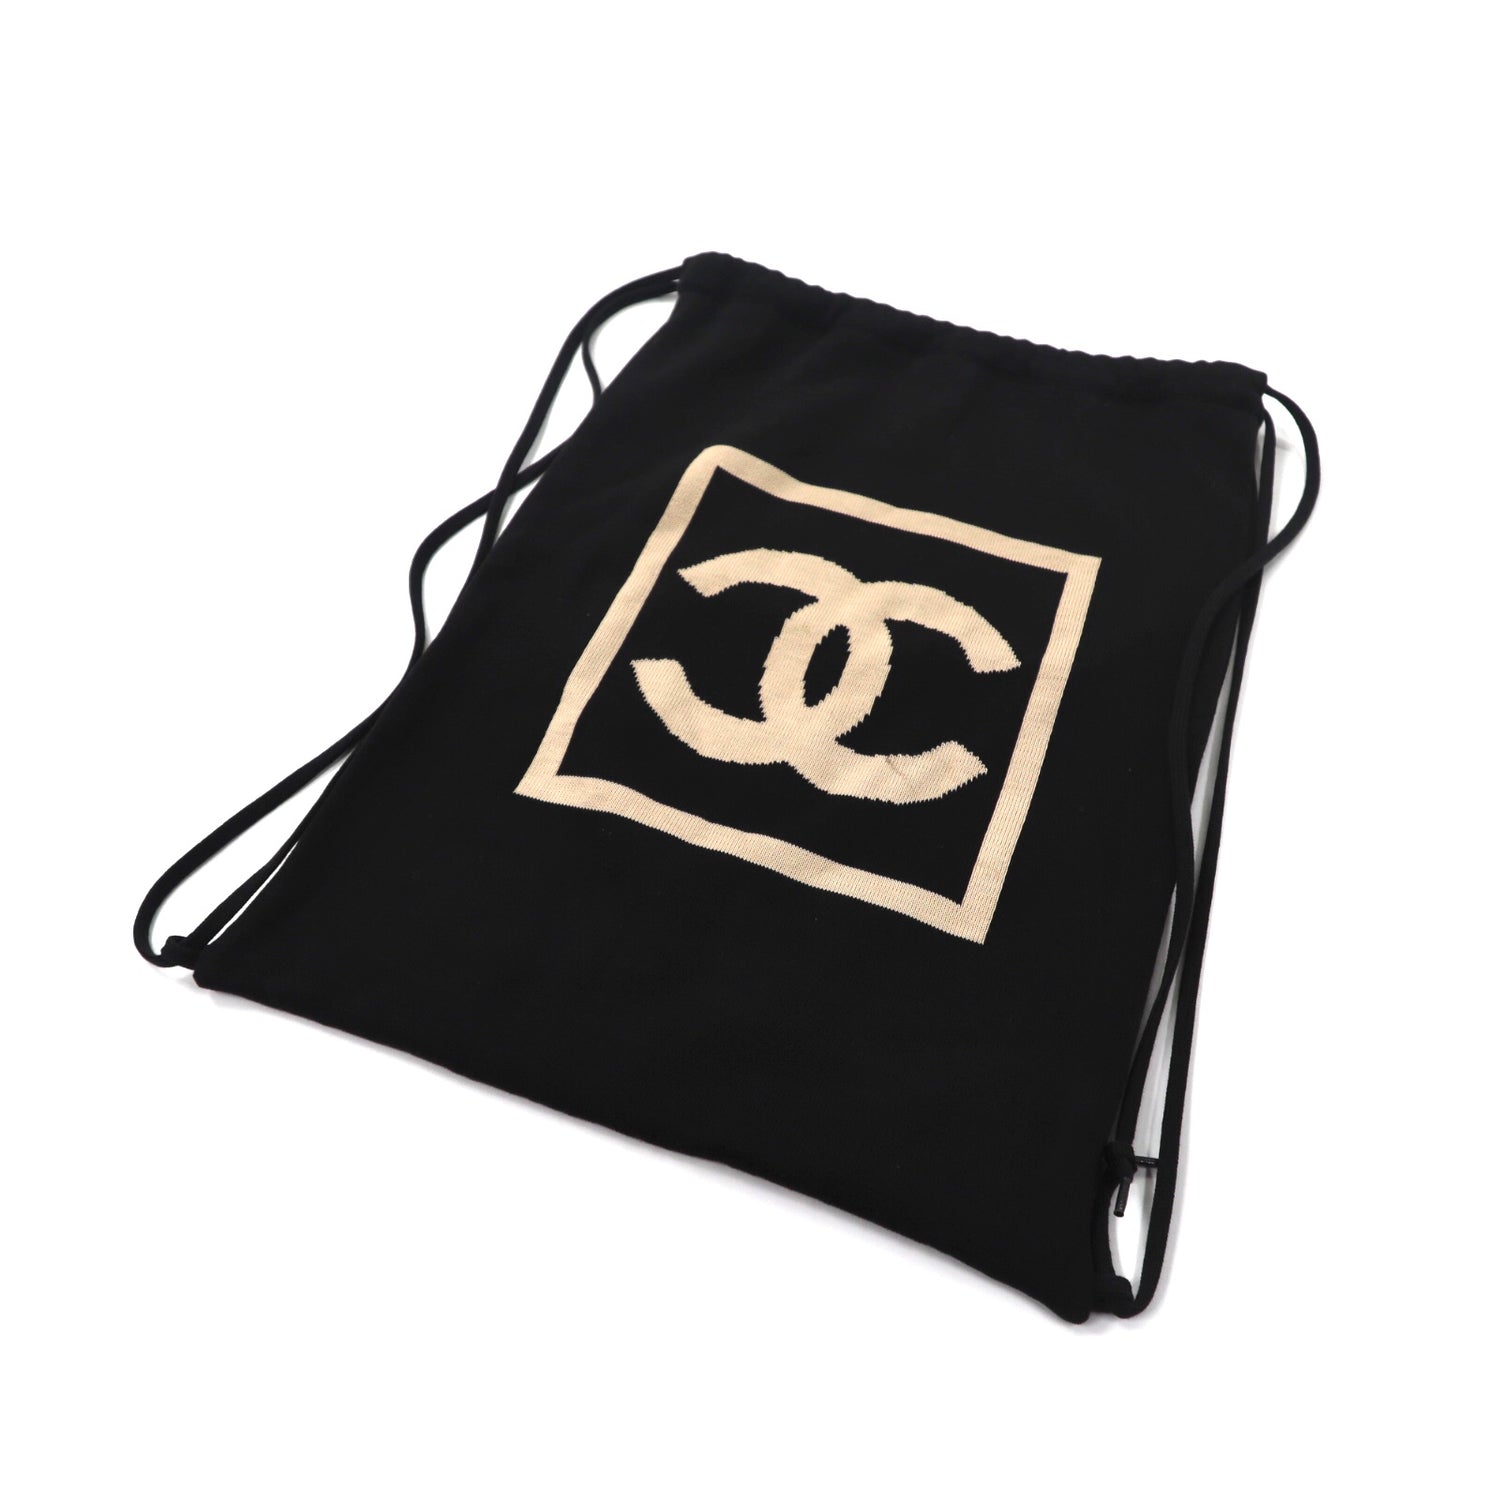 Chanel drawstring bag Backpack Black Sports Coco Mark France 2003